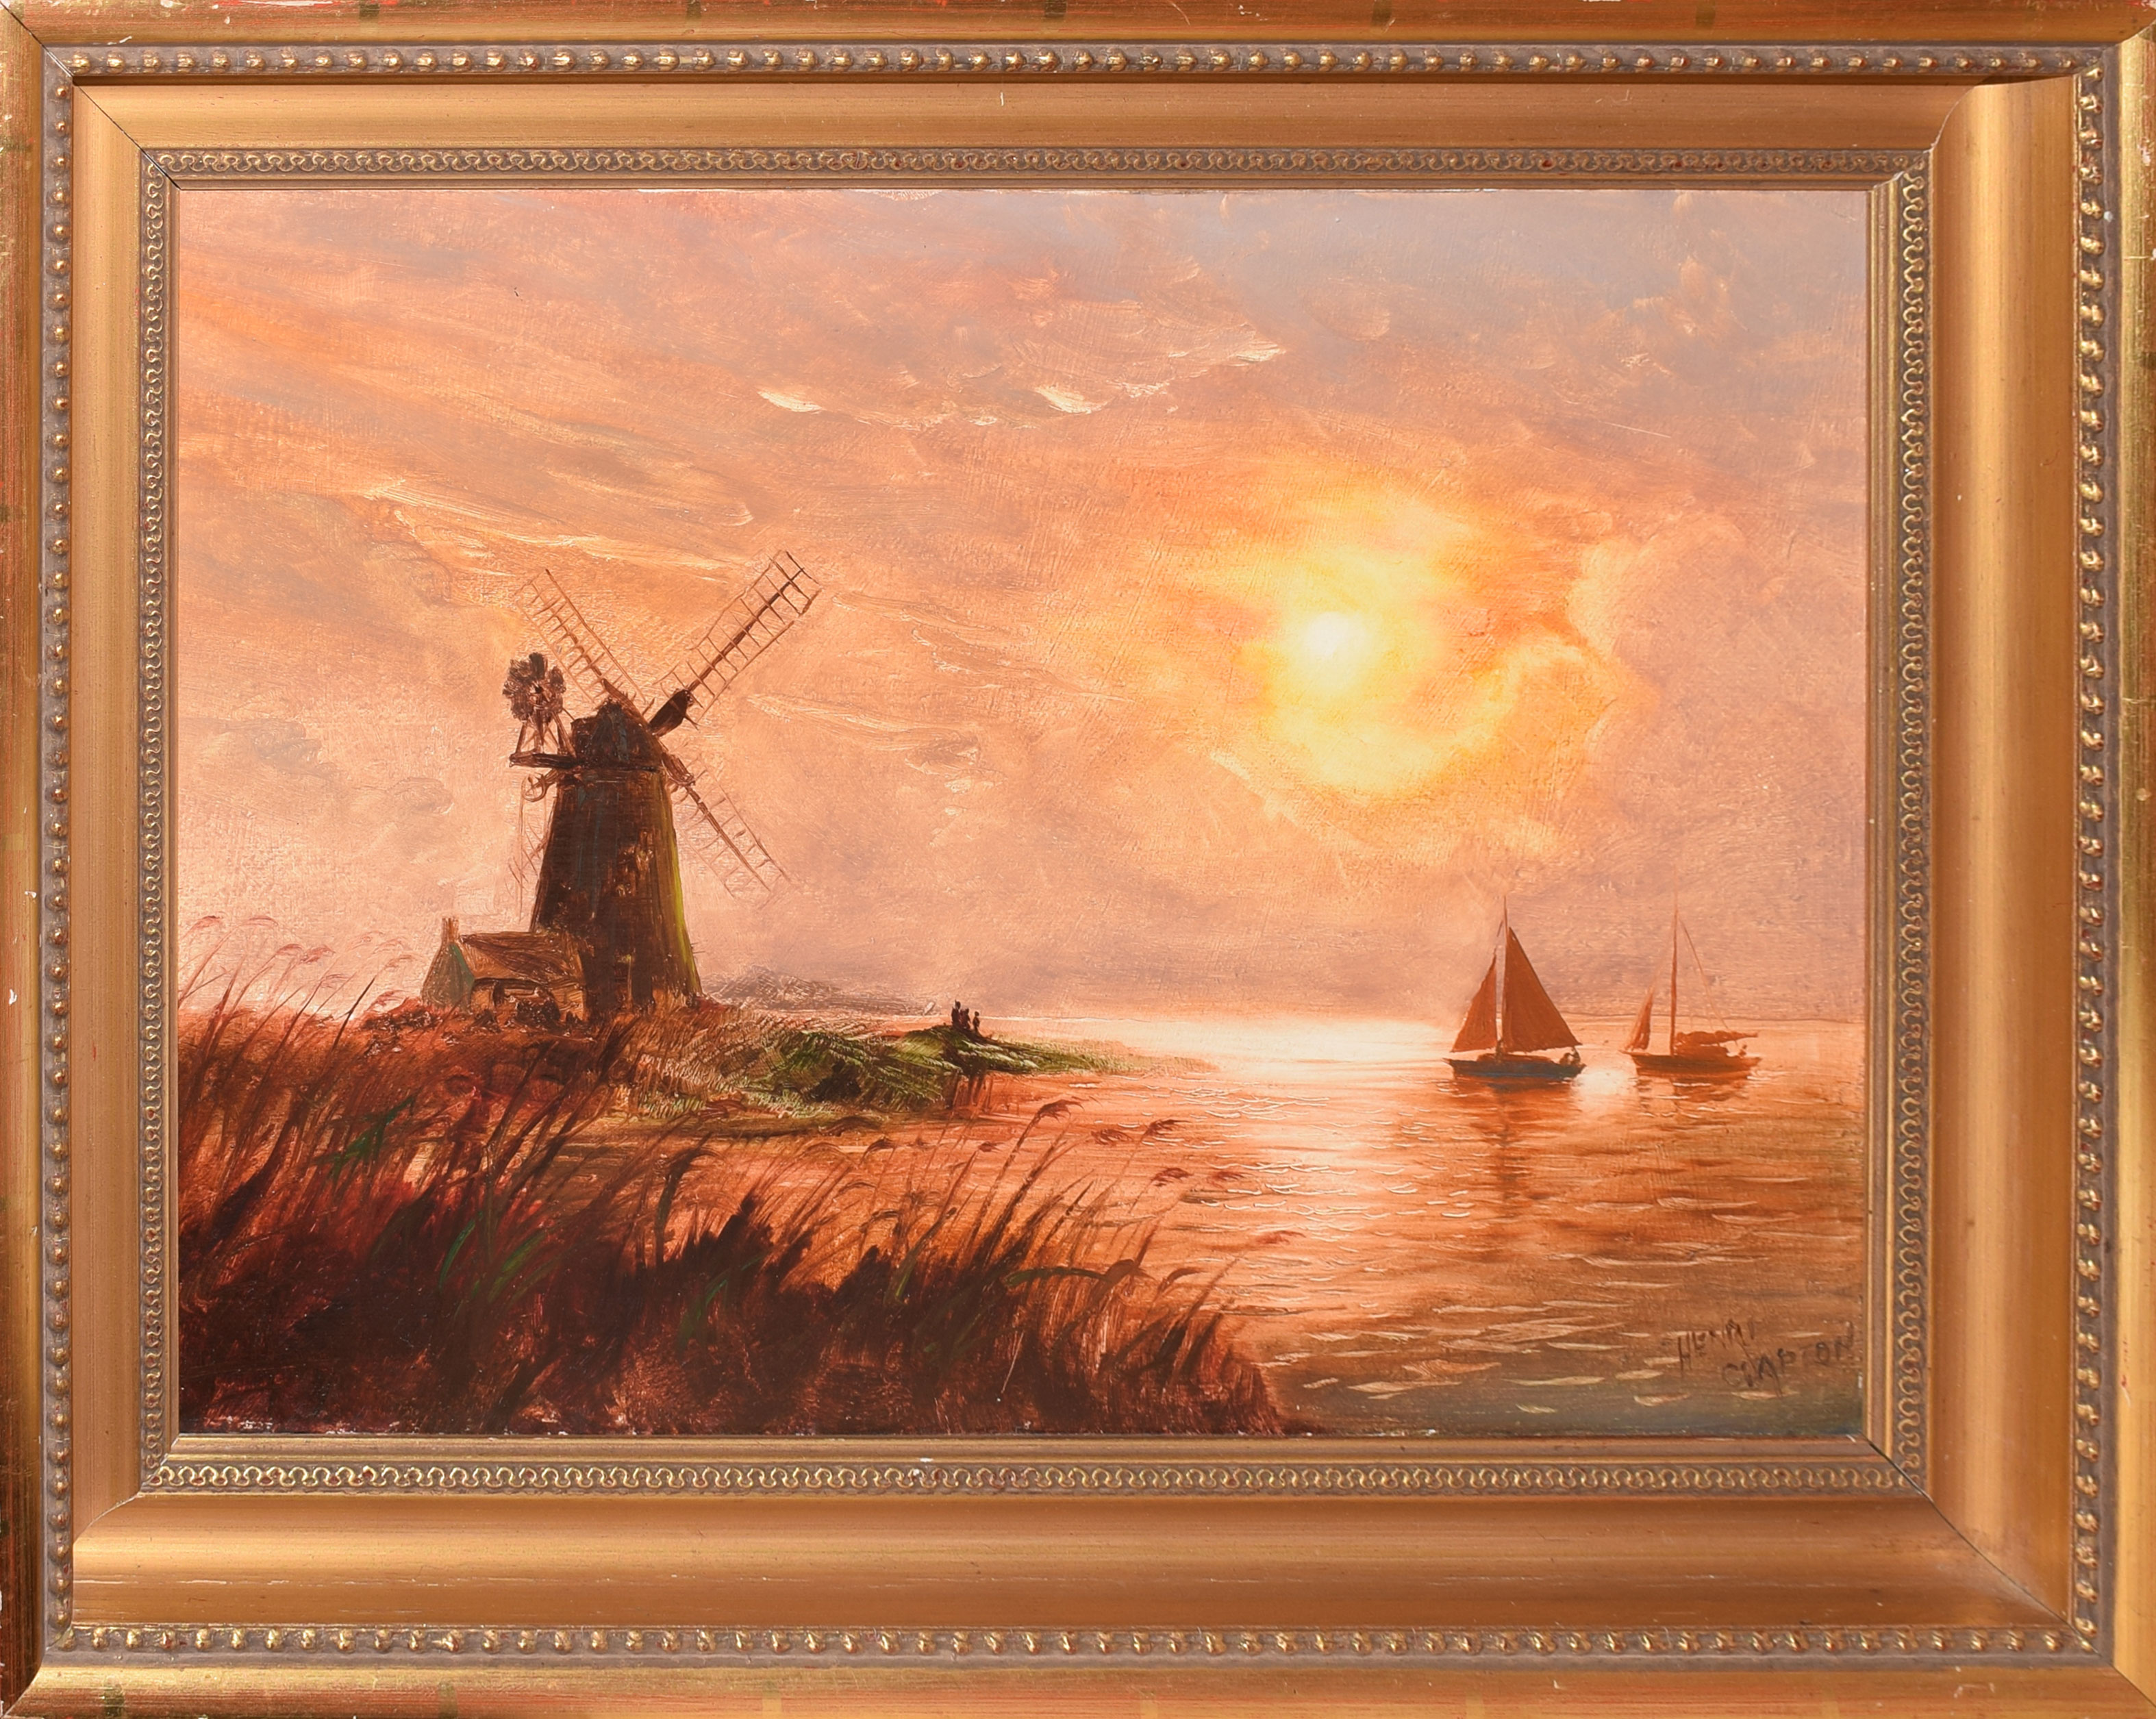 Henry Clapton, Broadland scene at dusk, oil on board, signed lower right, 30 x 41cm